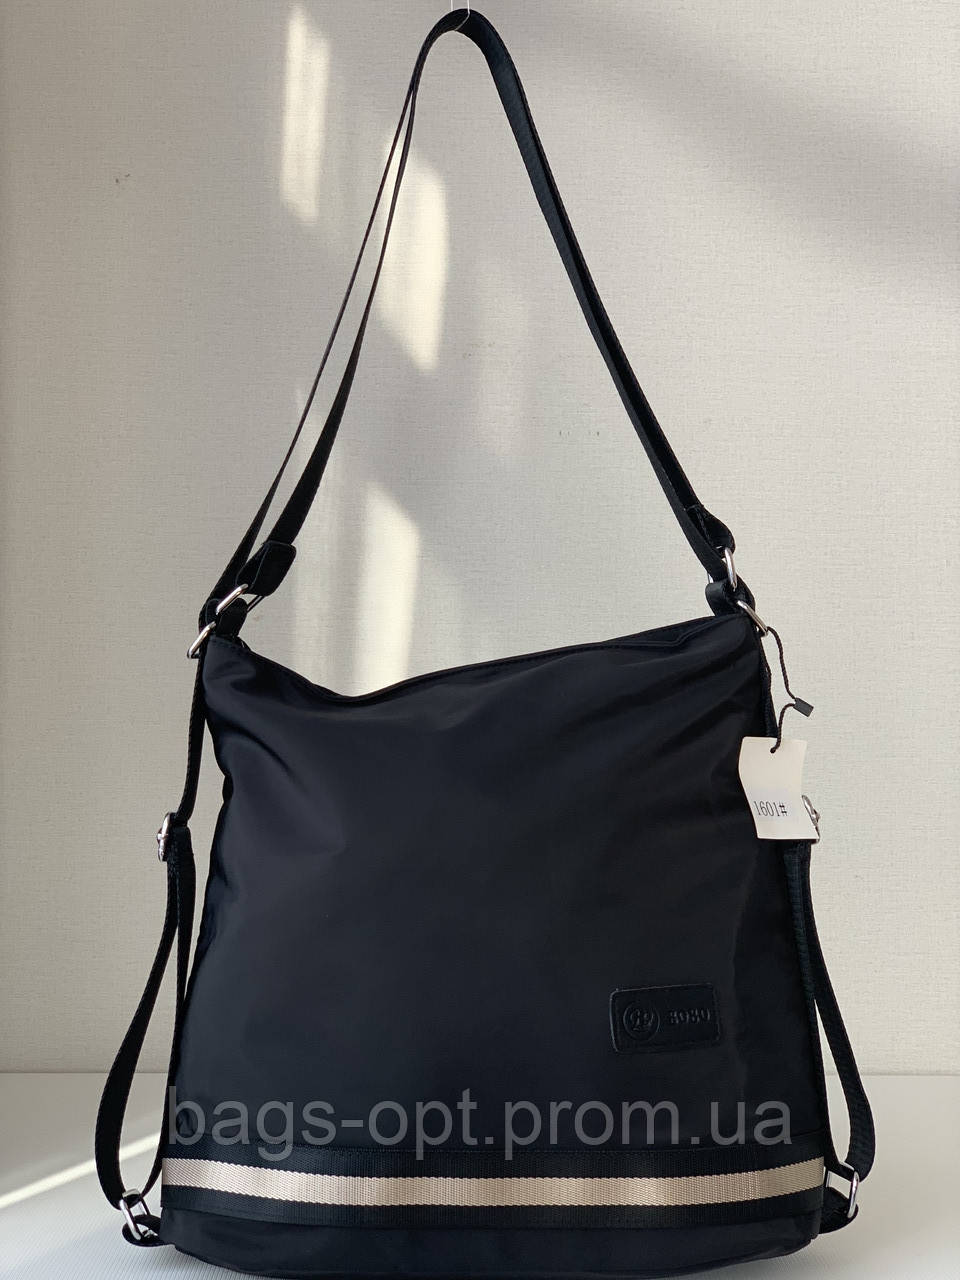 Спортивна непромокальна тканинна сумка рюкзак чорного кольору, фото 1